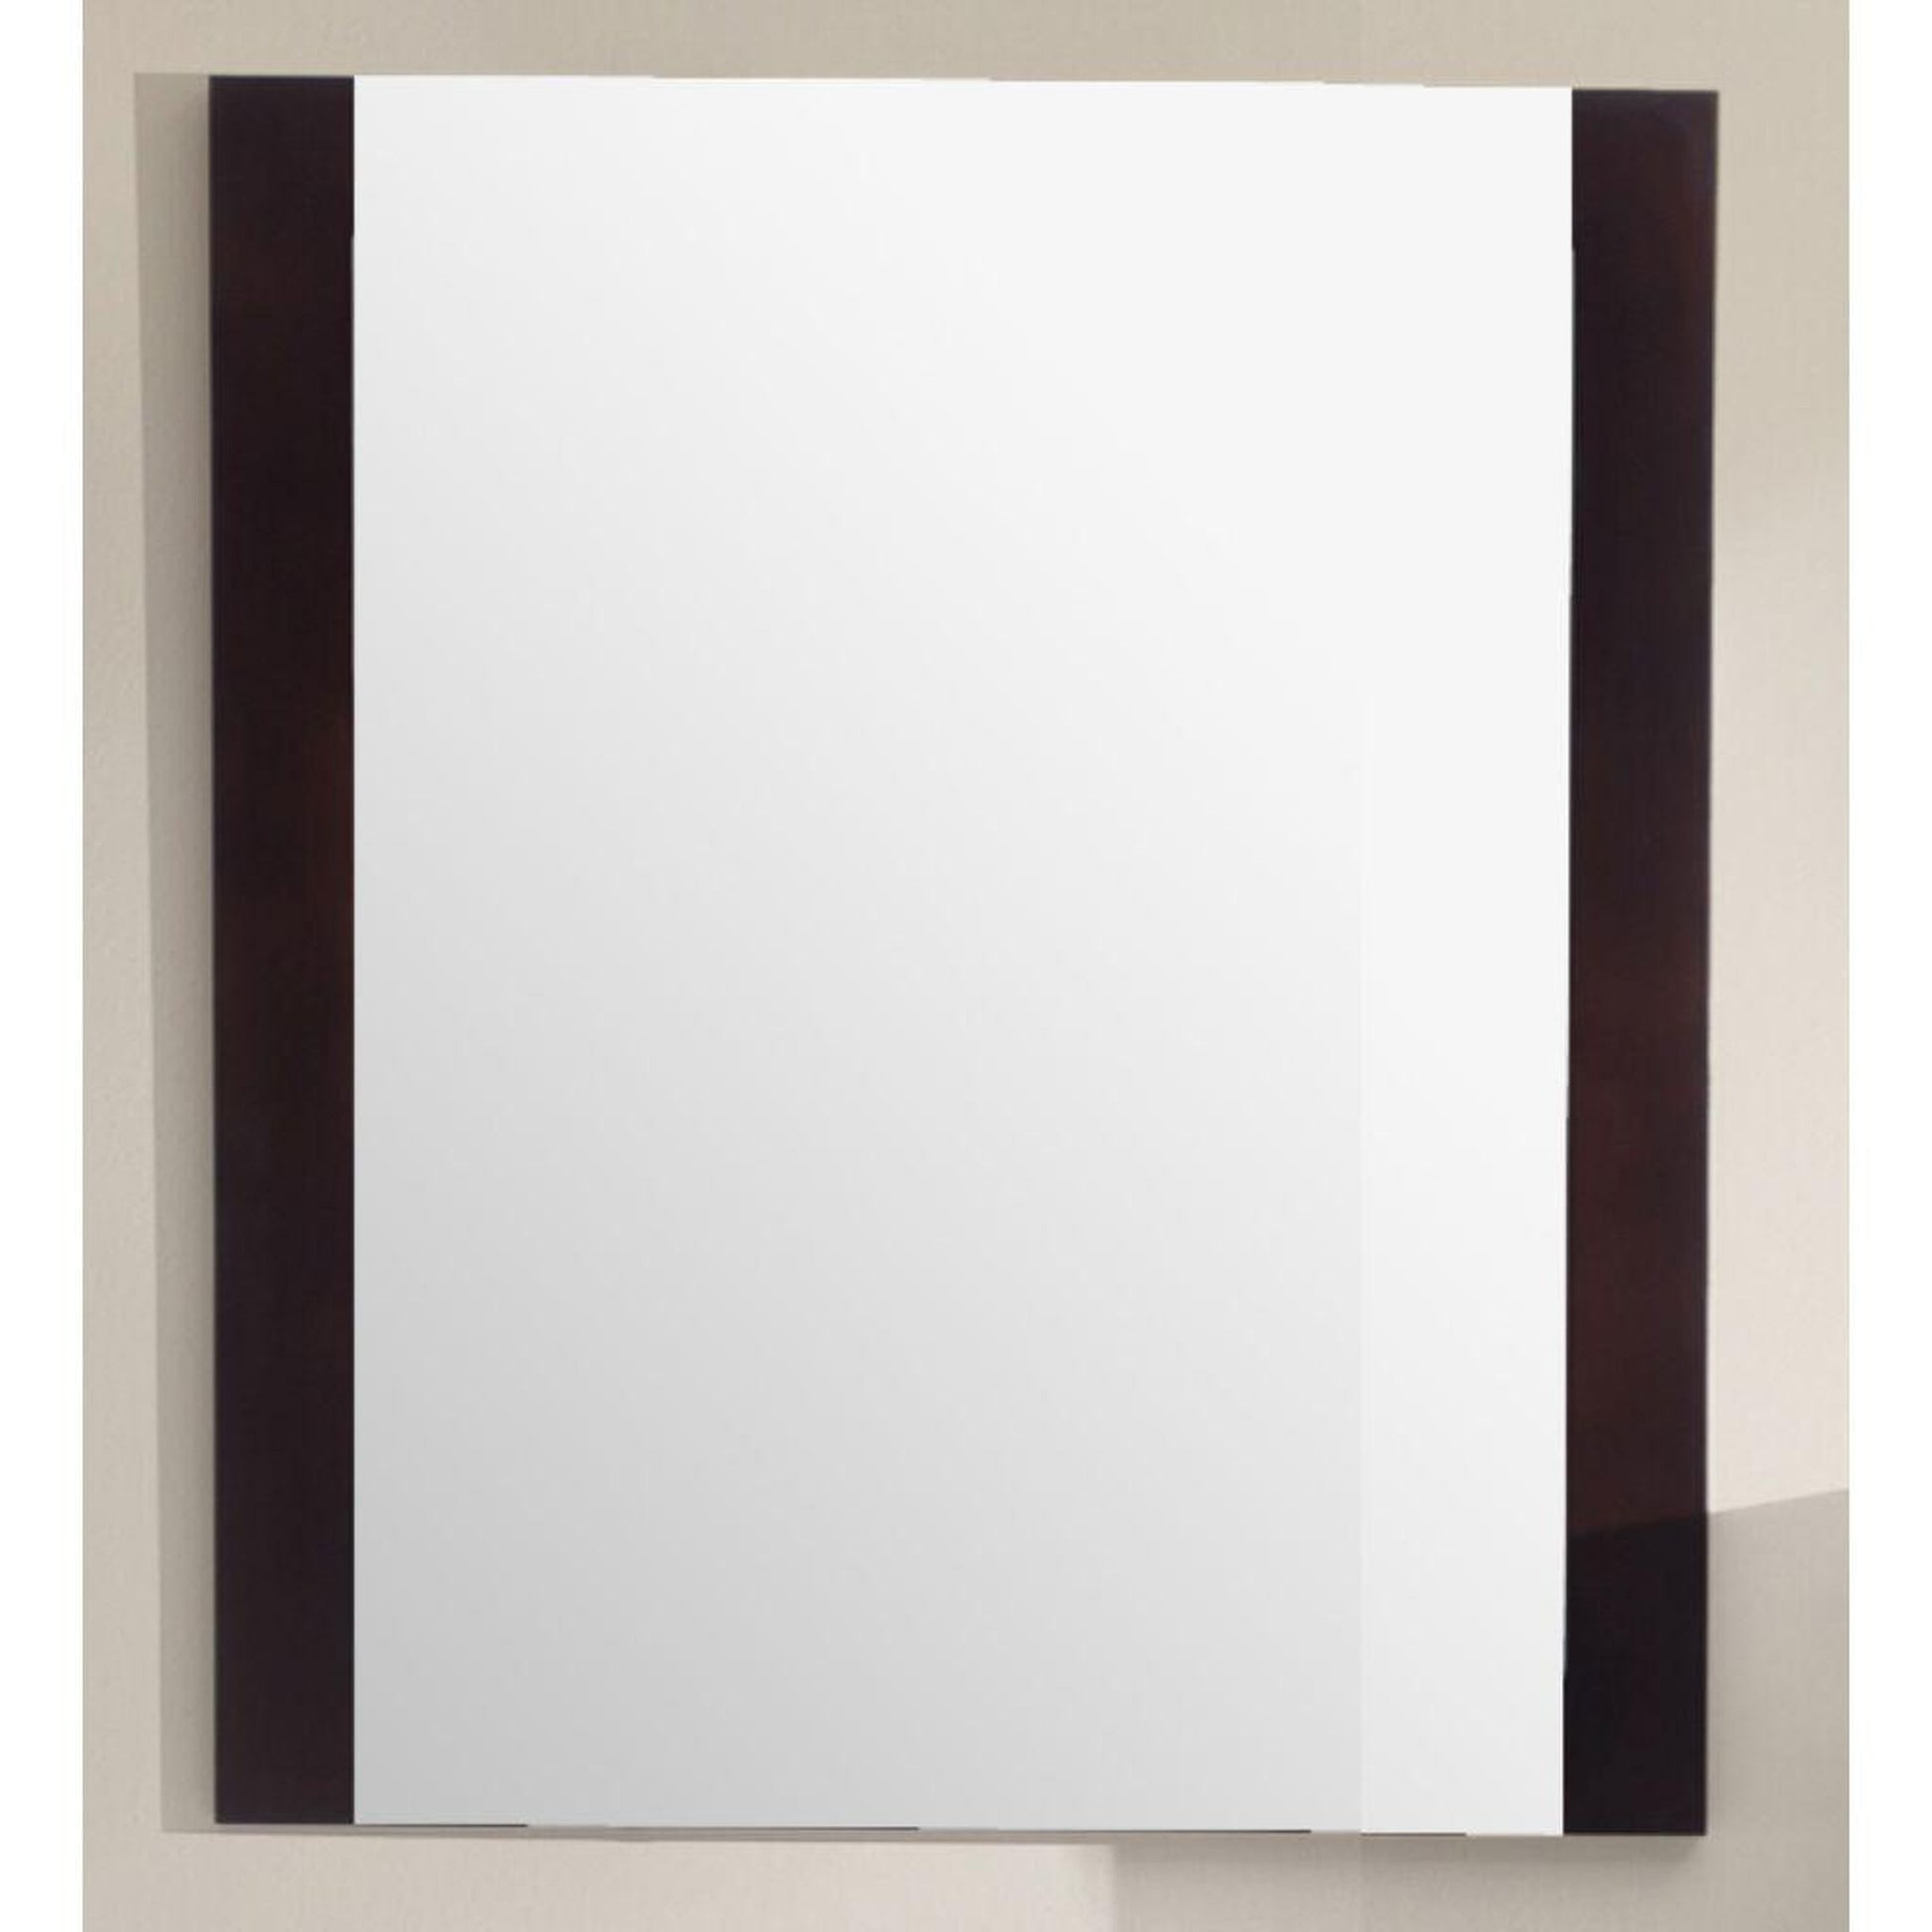 Laviva Rushmore 24" Brown Frame Rectangular Mirror